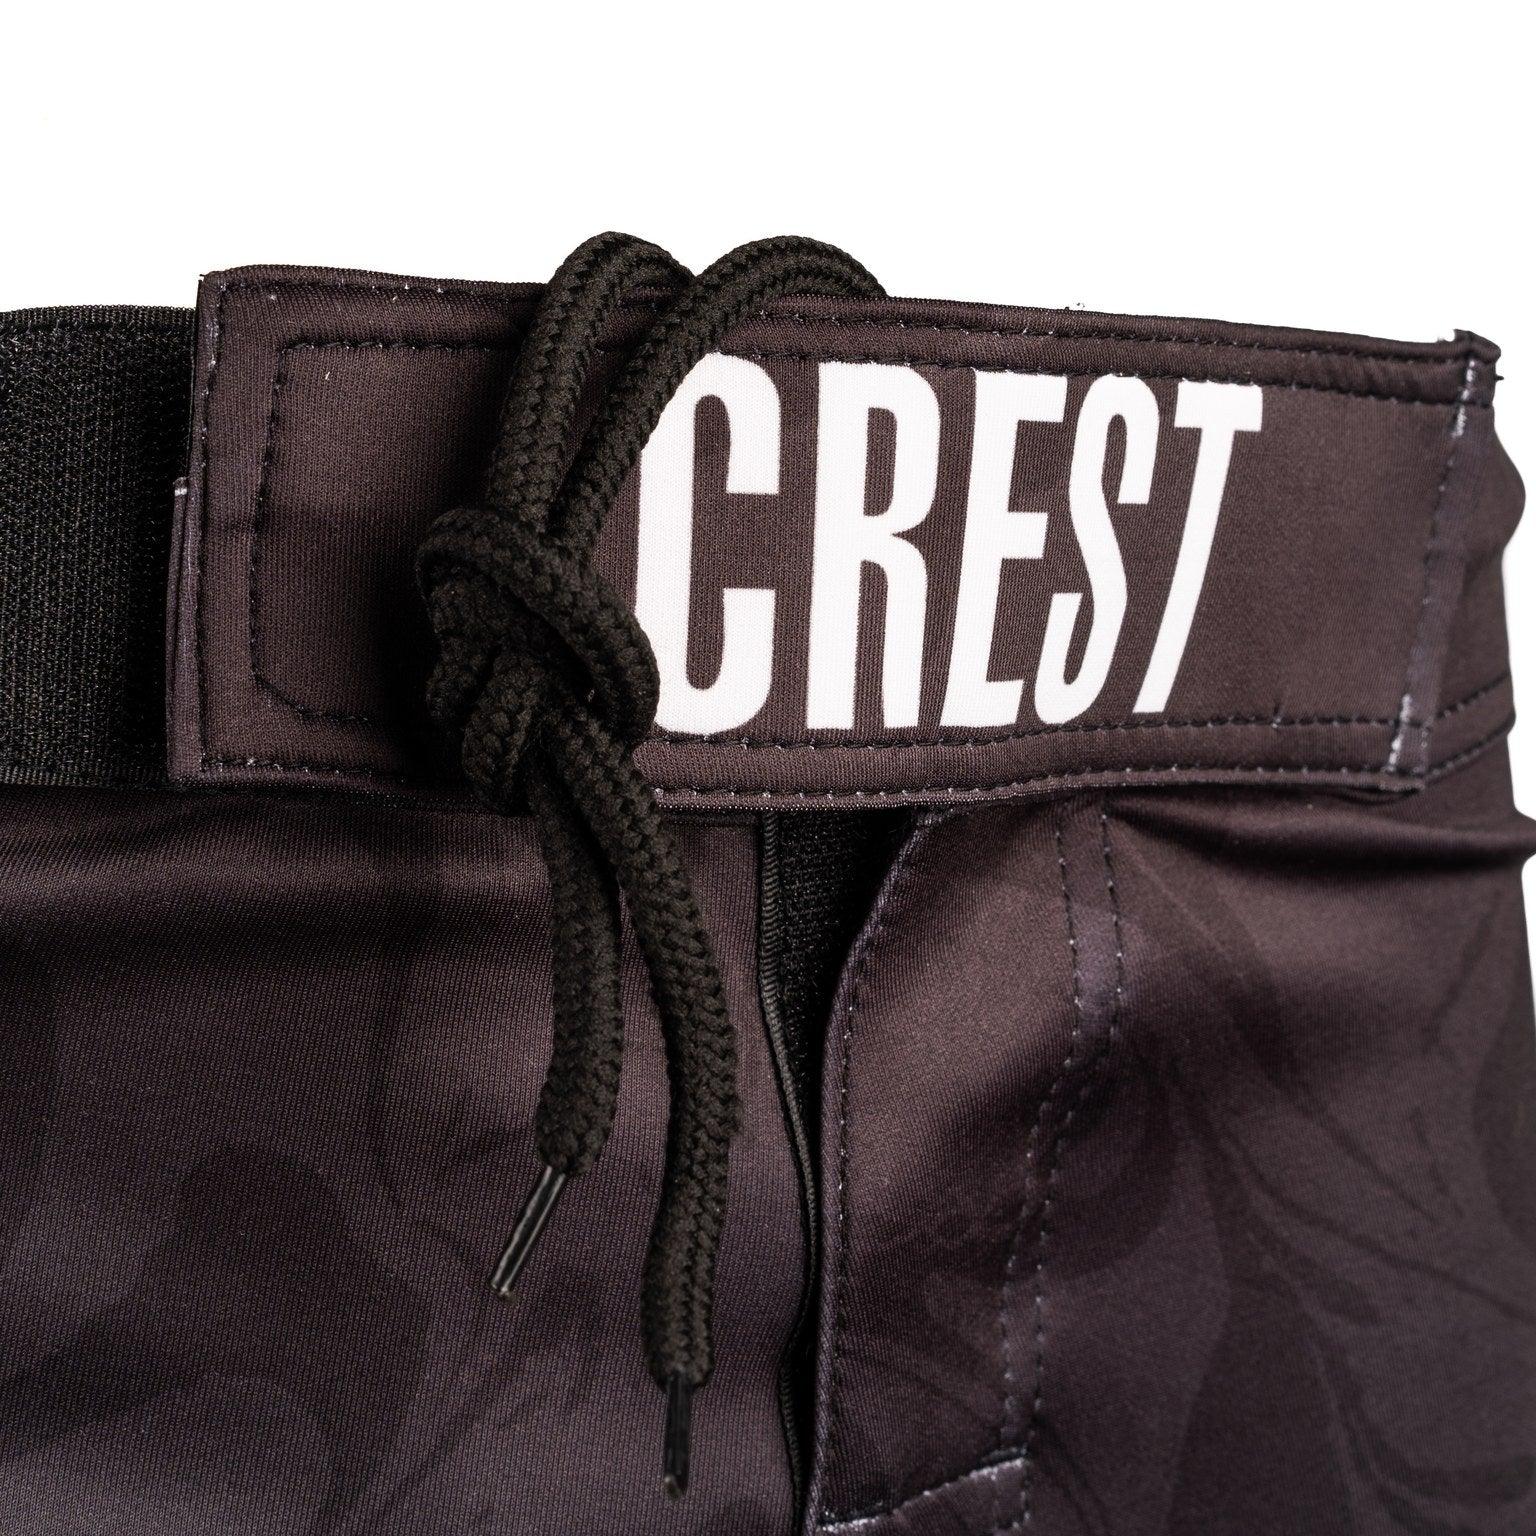 MMA-shorts "CREST" - Crest - PFG